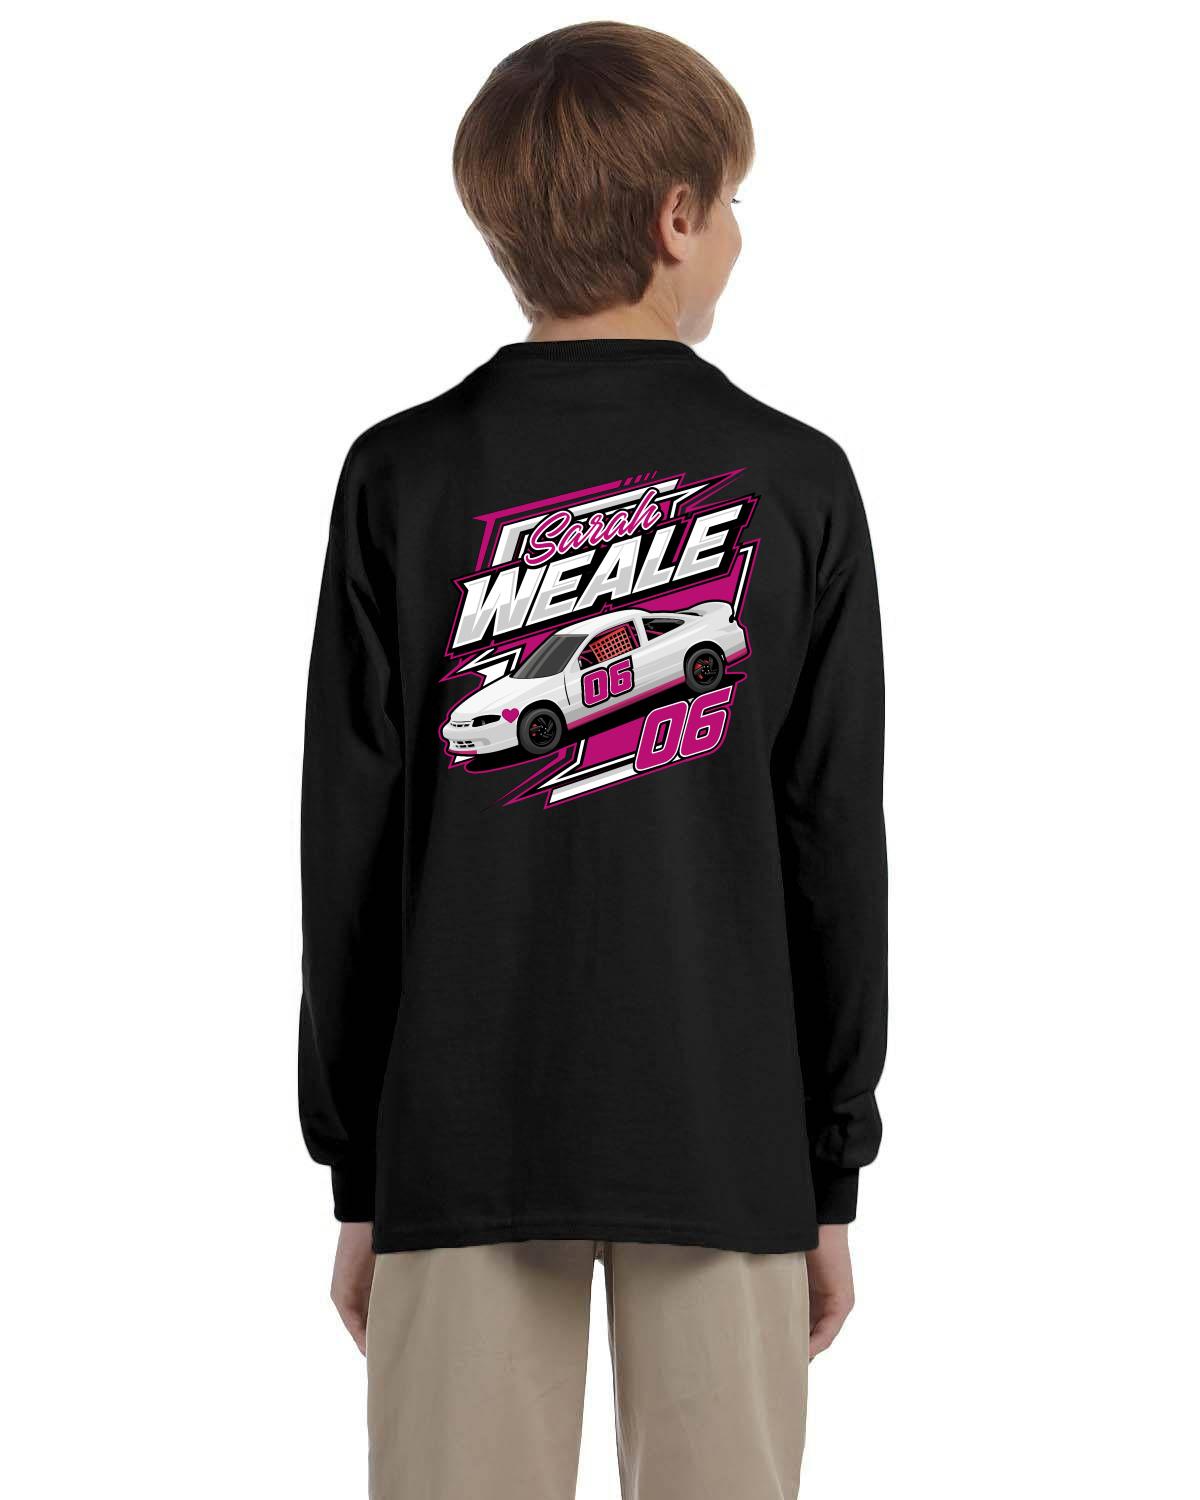 Sarah Weale Racing Youth Long-Sleeve T-Shirt